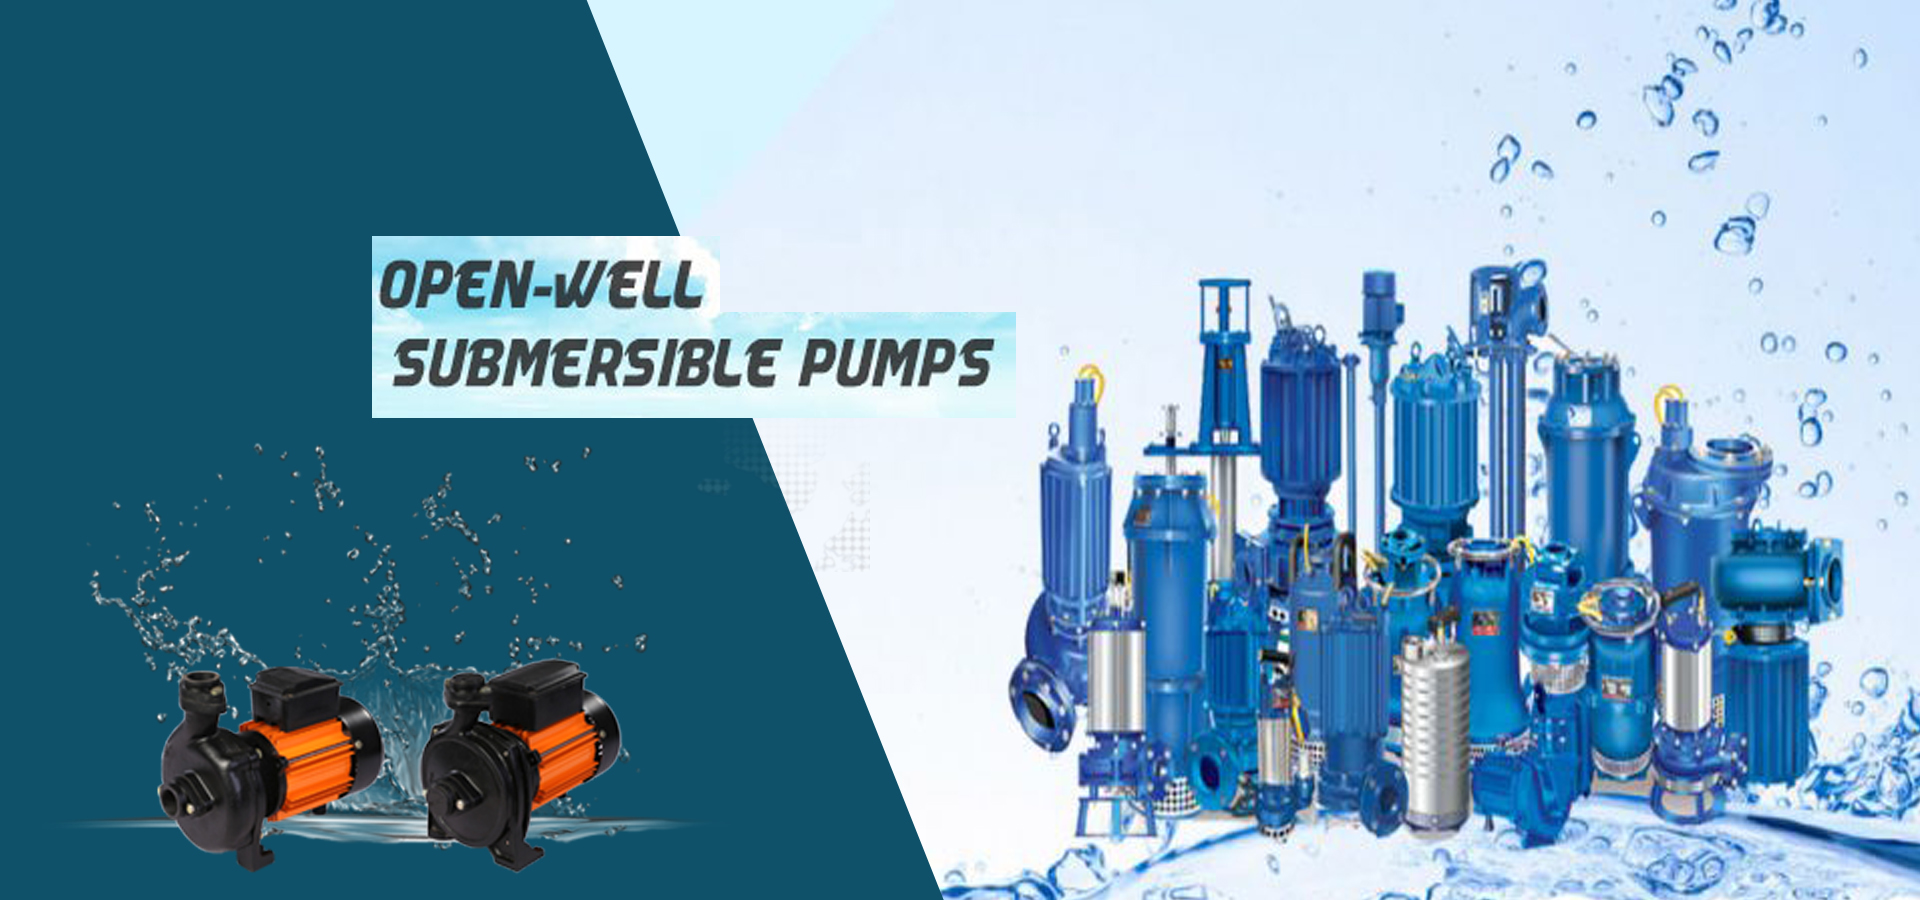 Submersible pumps thrissur